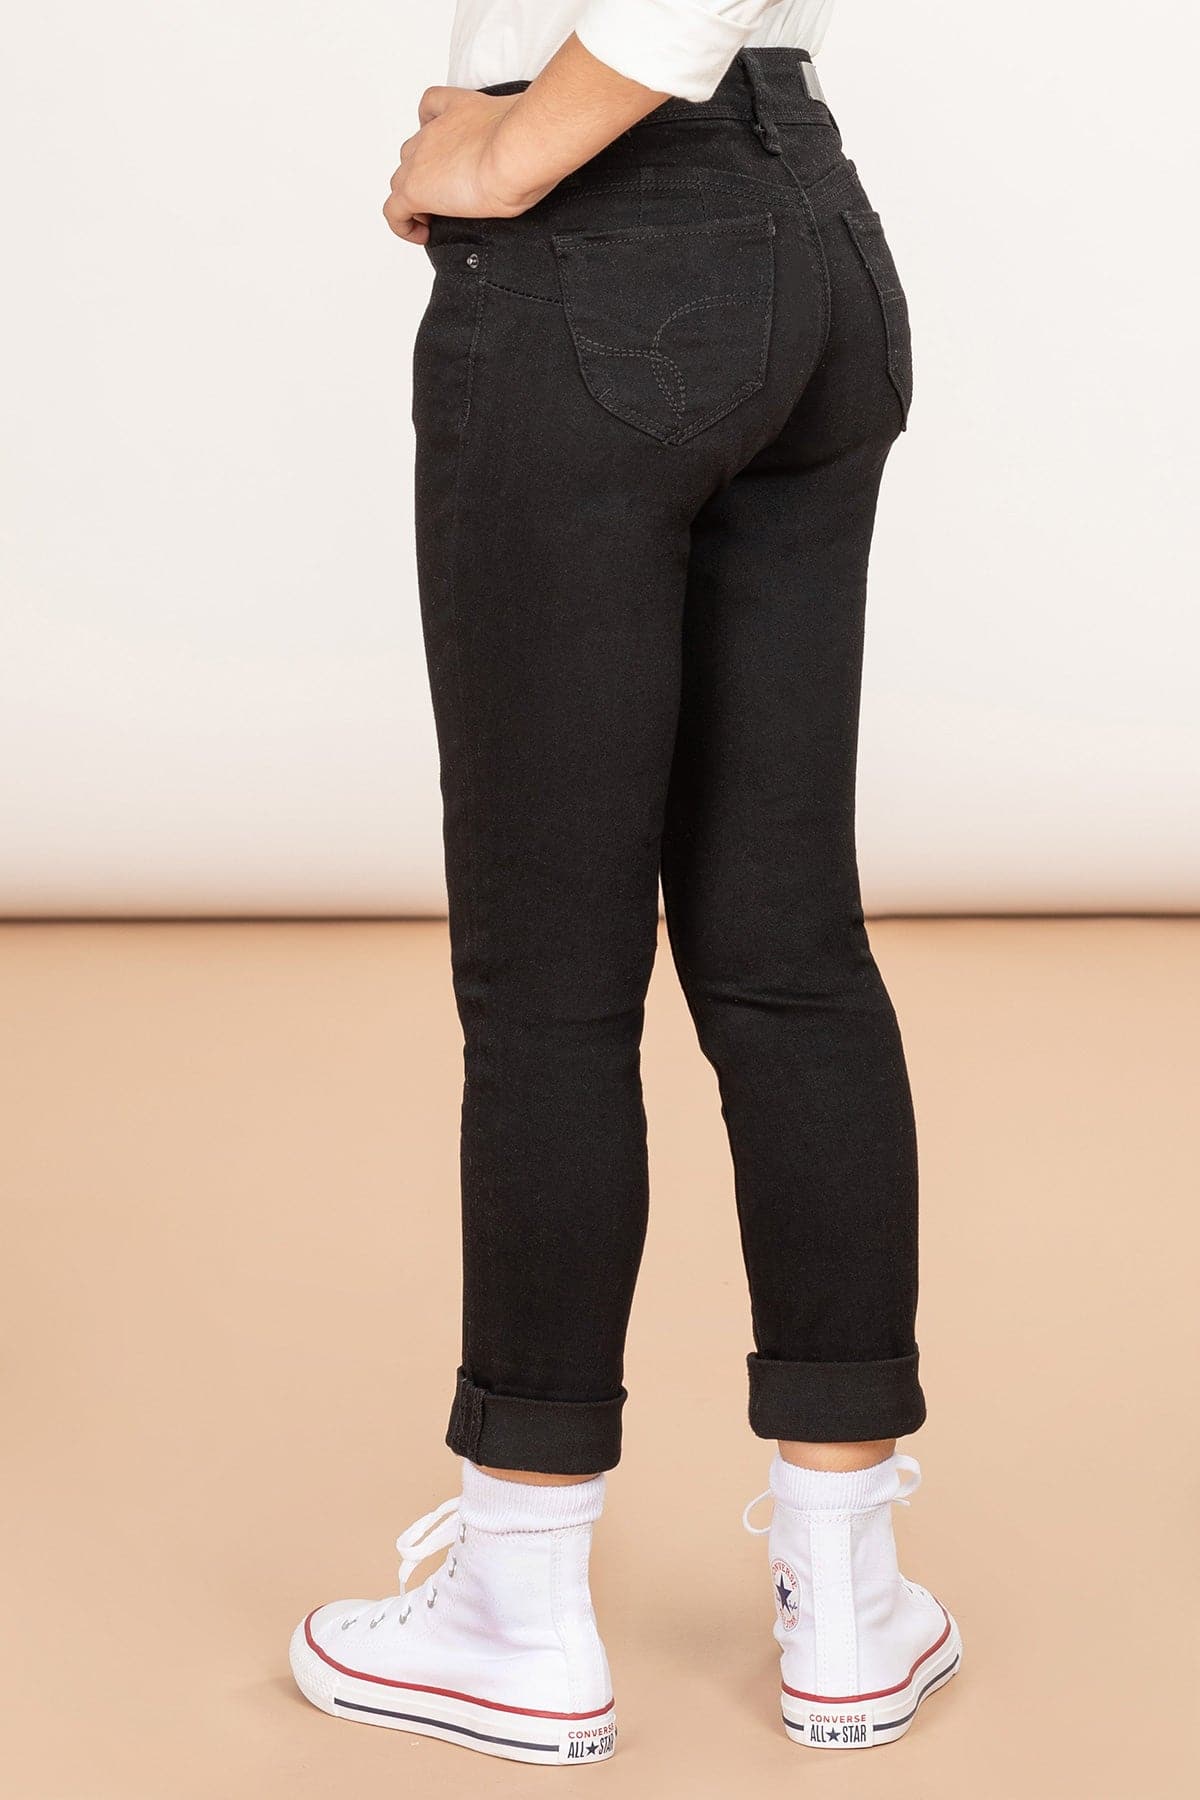 Girls Wannabettafit Cuffed Skinny Jeans Gp234450